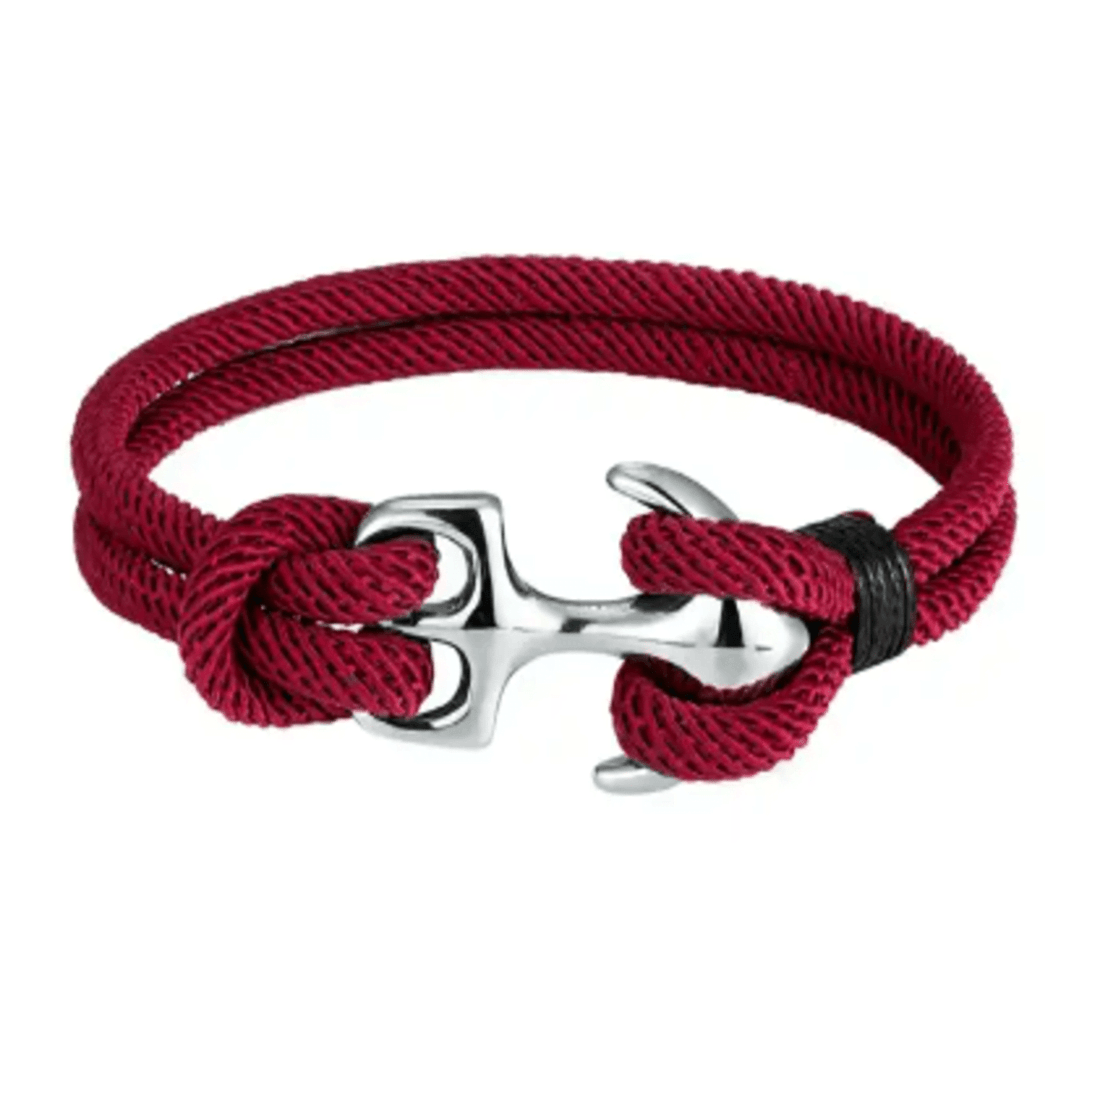 Brazalete de Cuerda con Broche de Titanio Rojo x 21cm